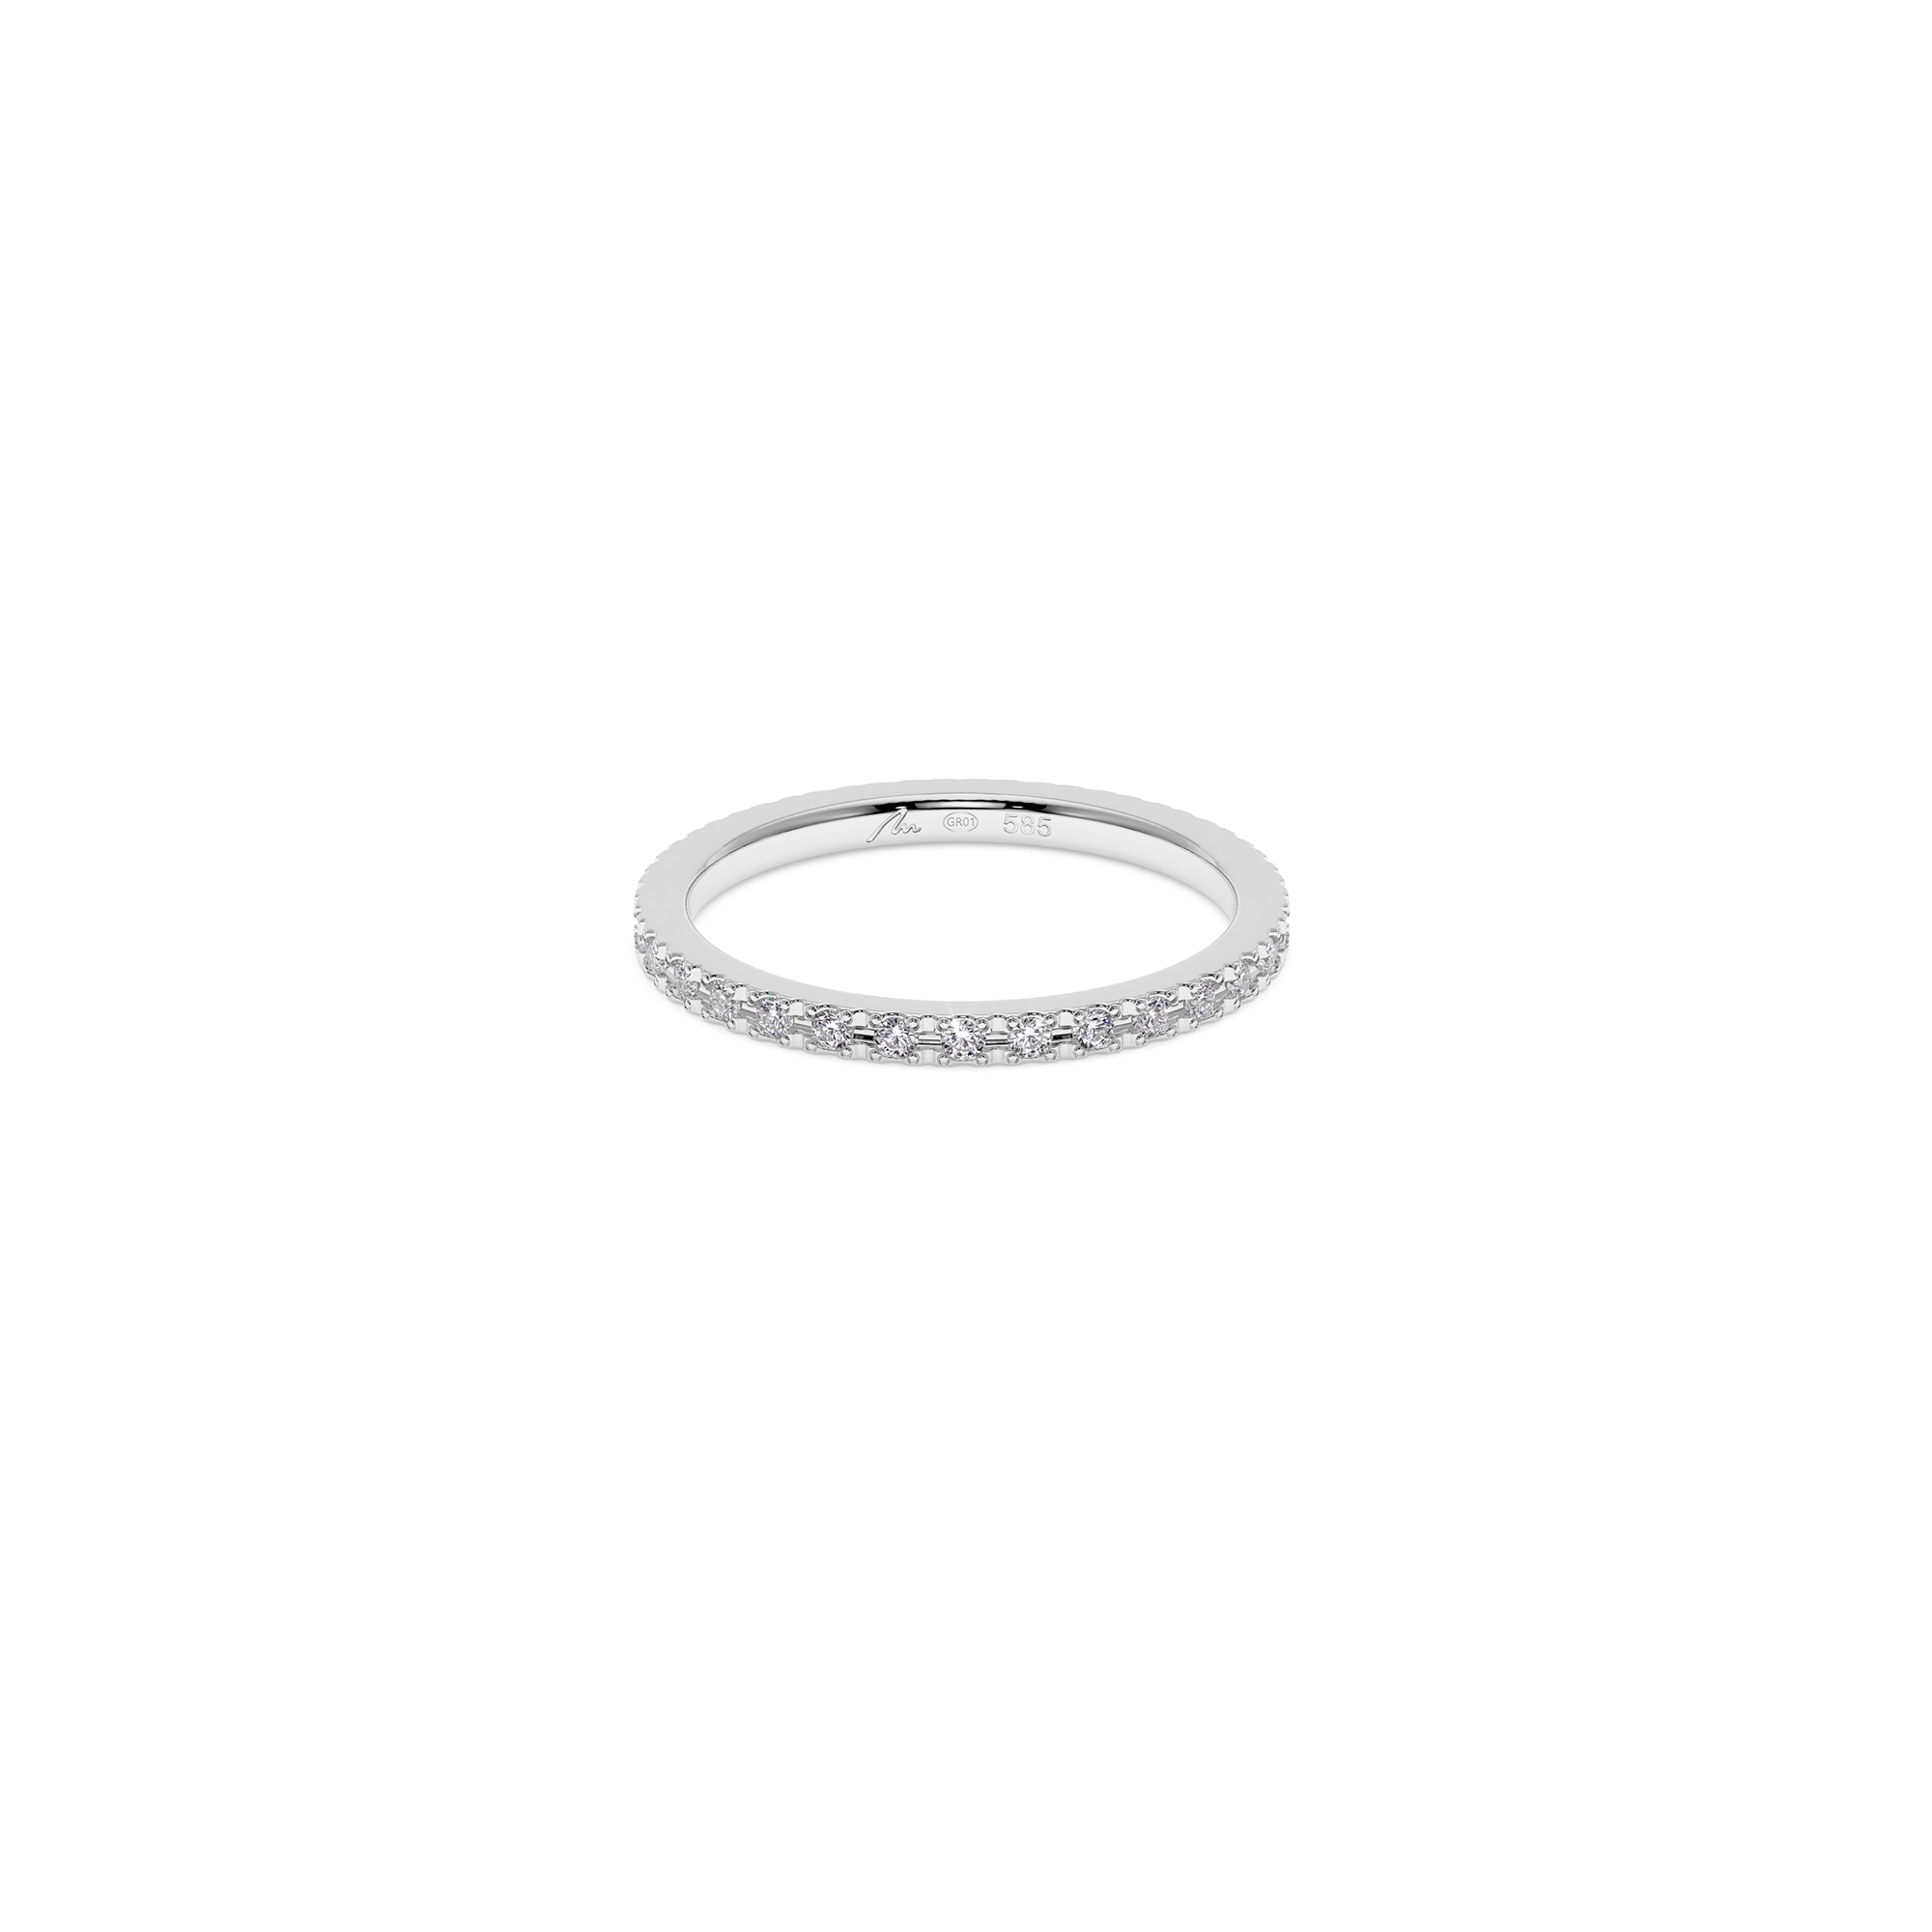 14 k white gold Tennis ring with 0.15 CT white diamonds